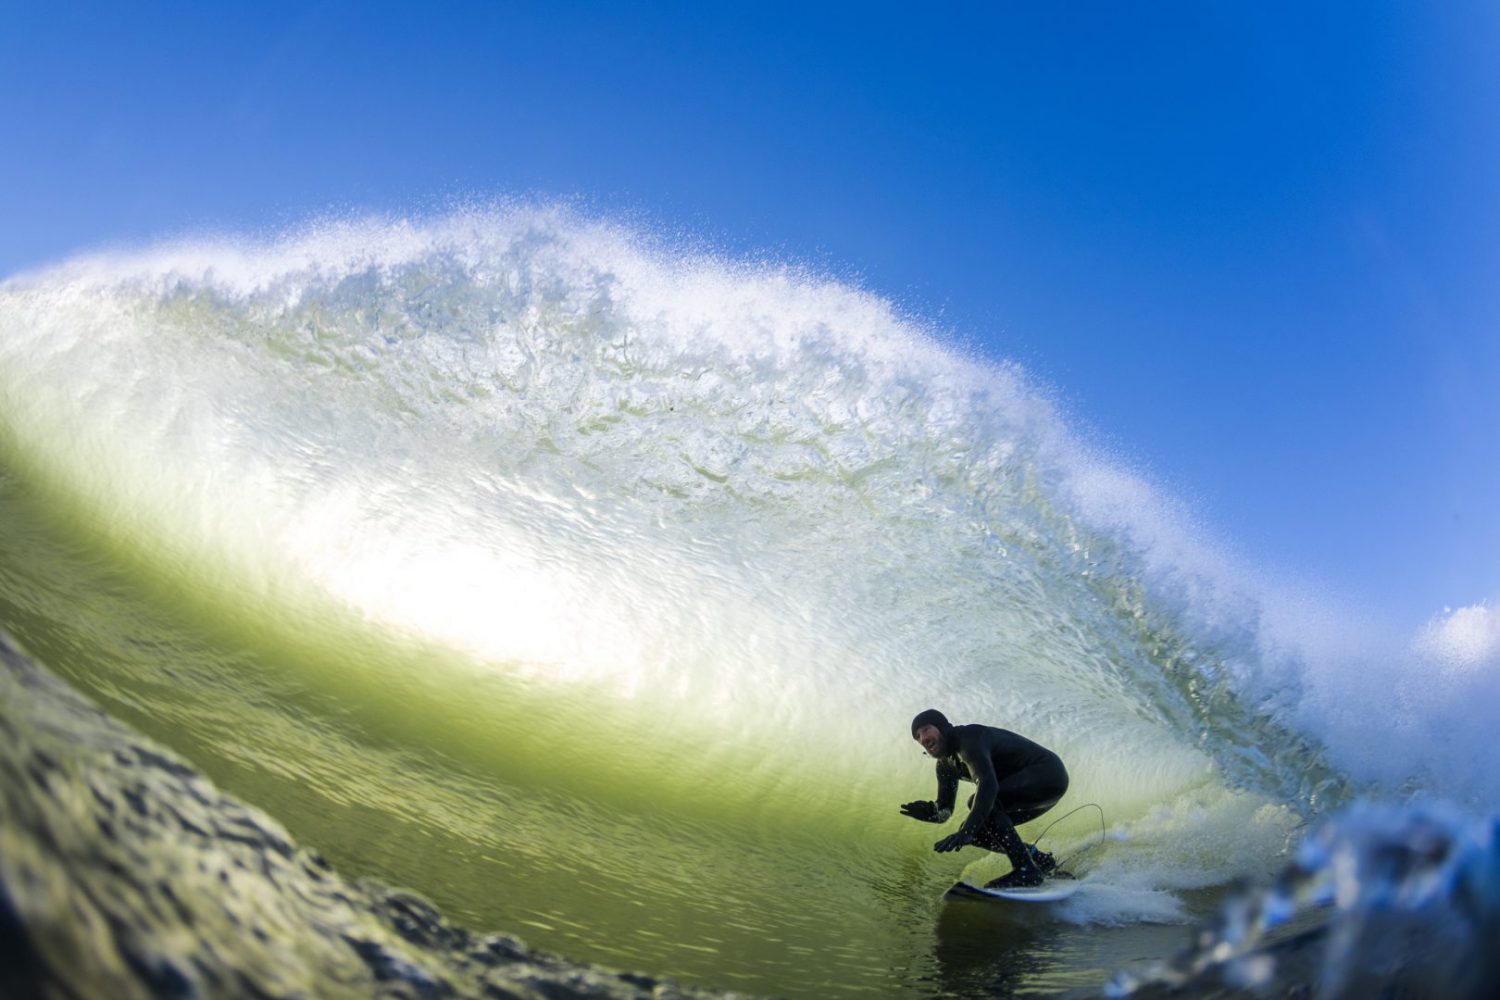 Ryan Mack & Sam Hammer, New Jersey – “Underneath Surfer”